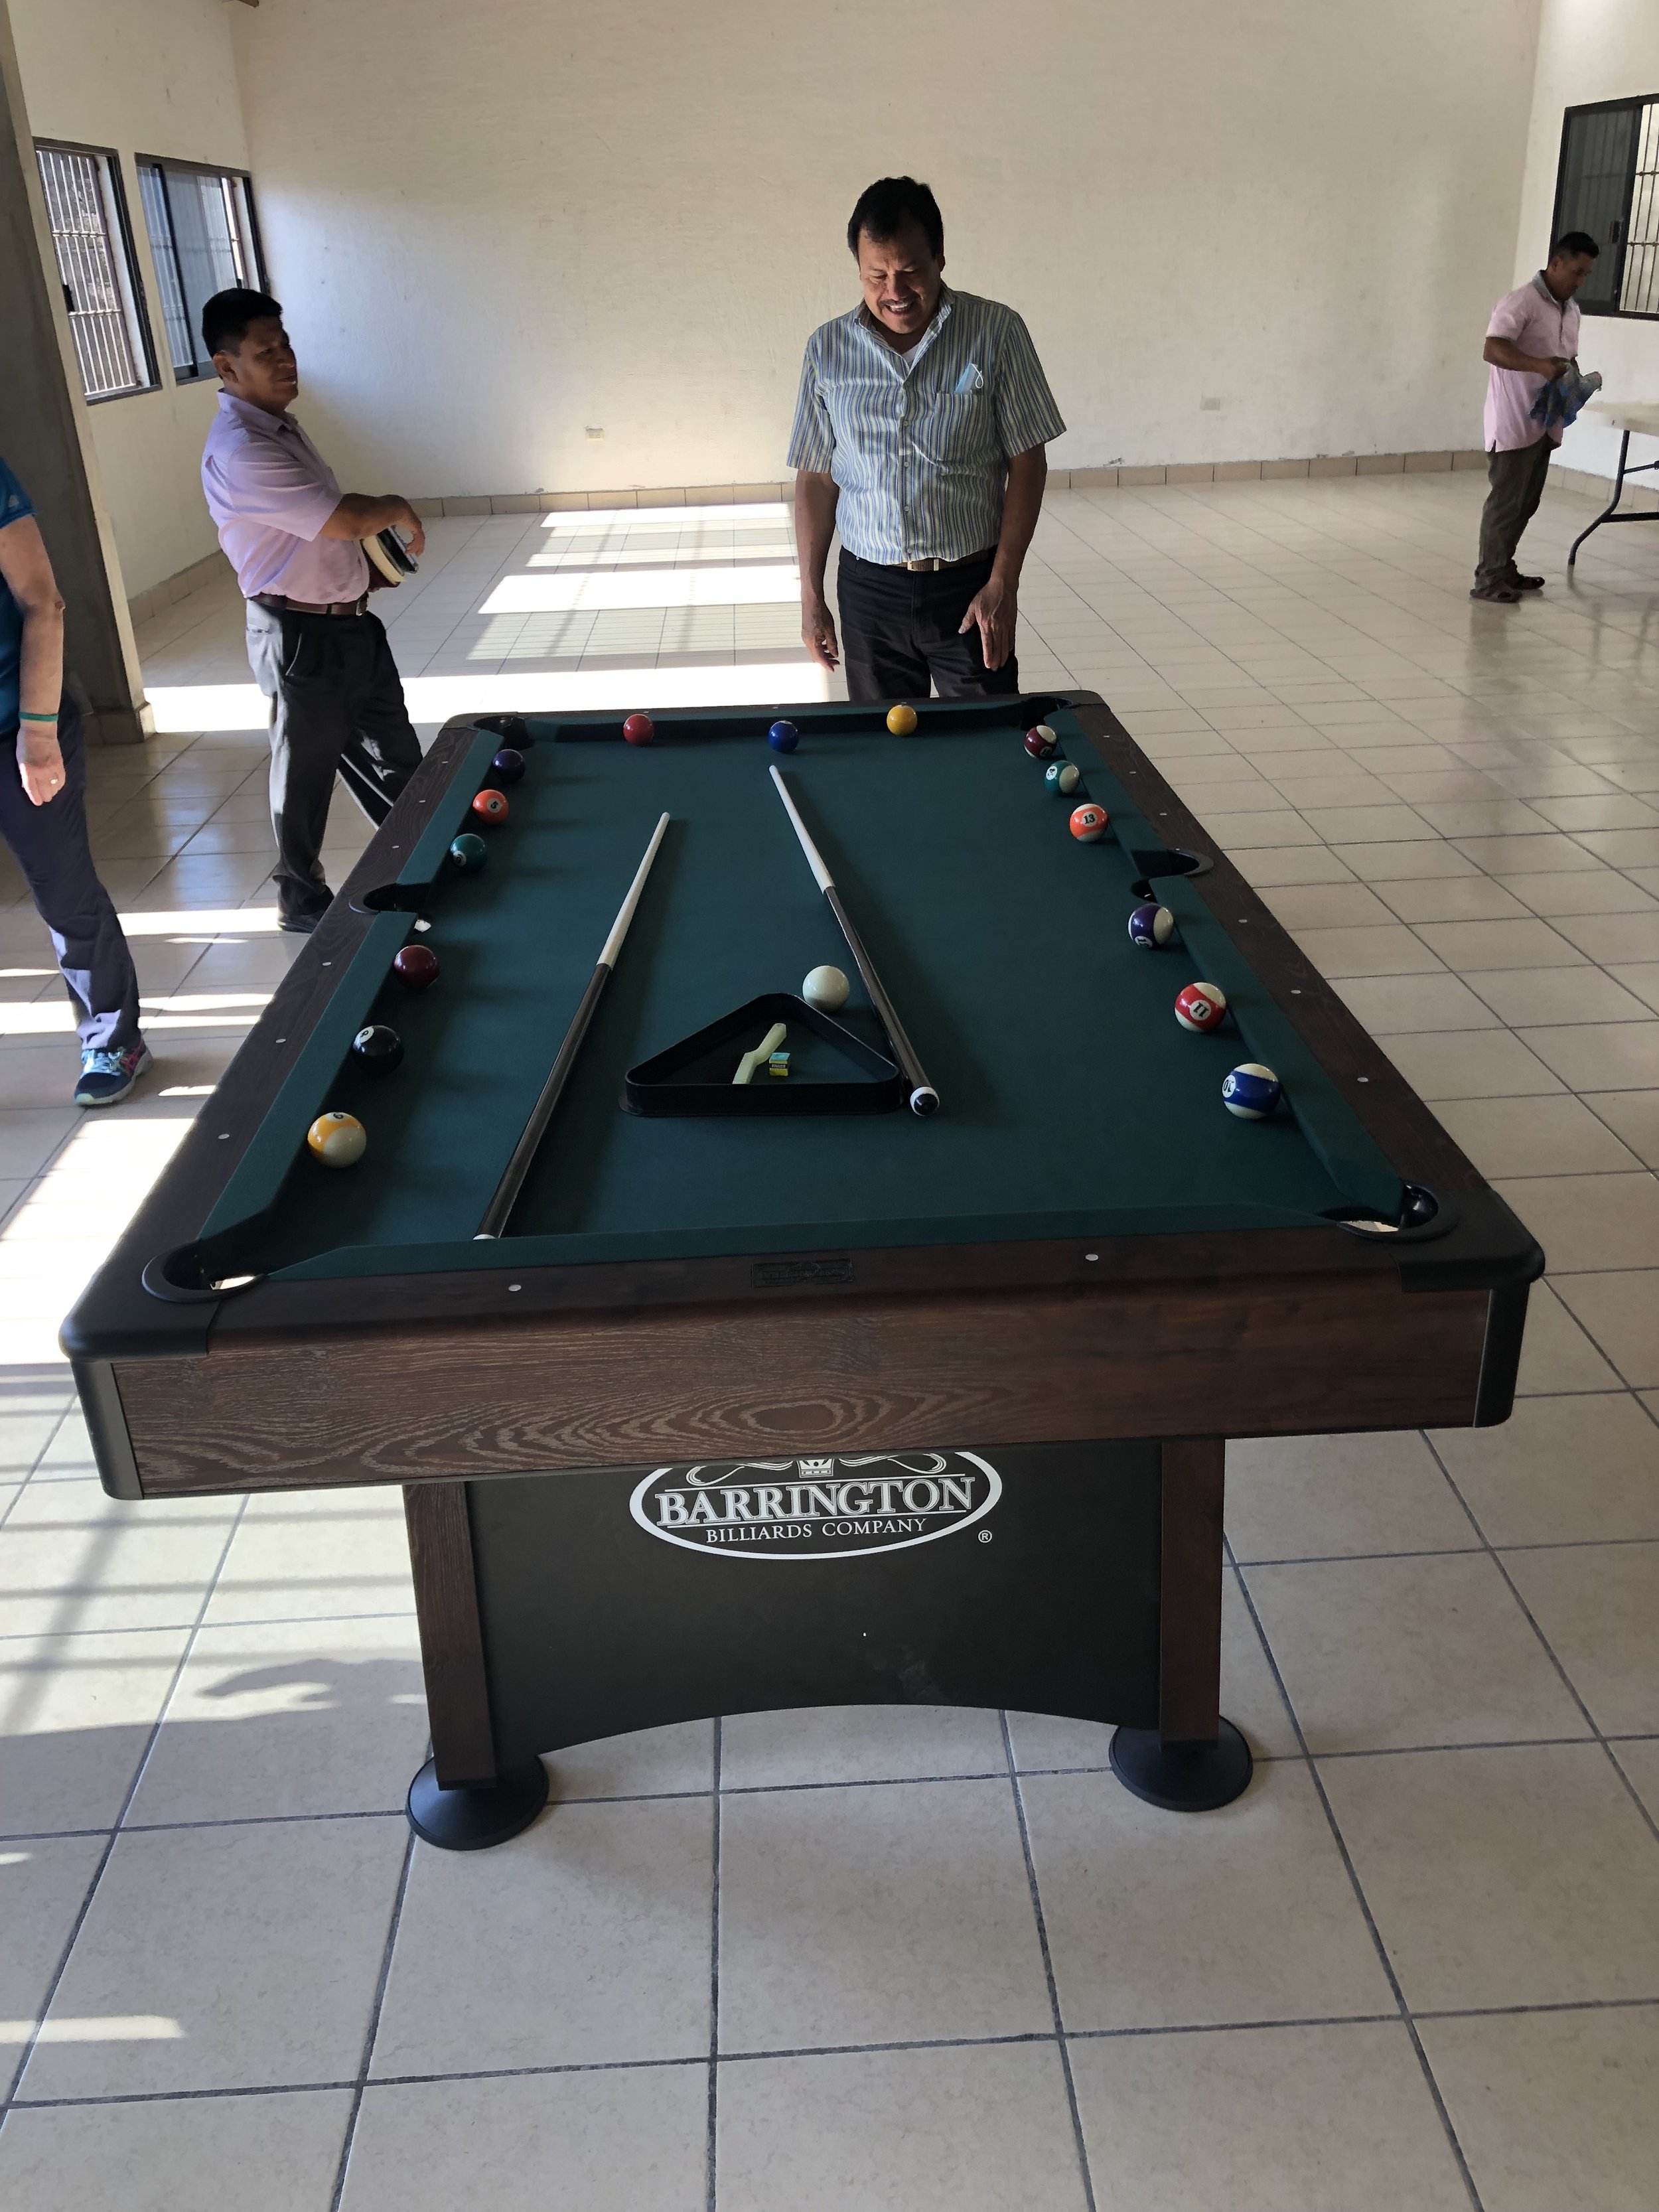 New pool table at Centro Shalom